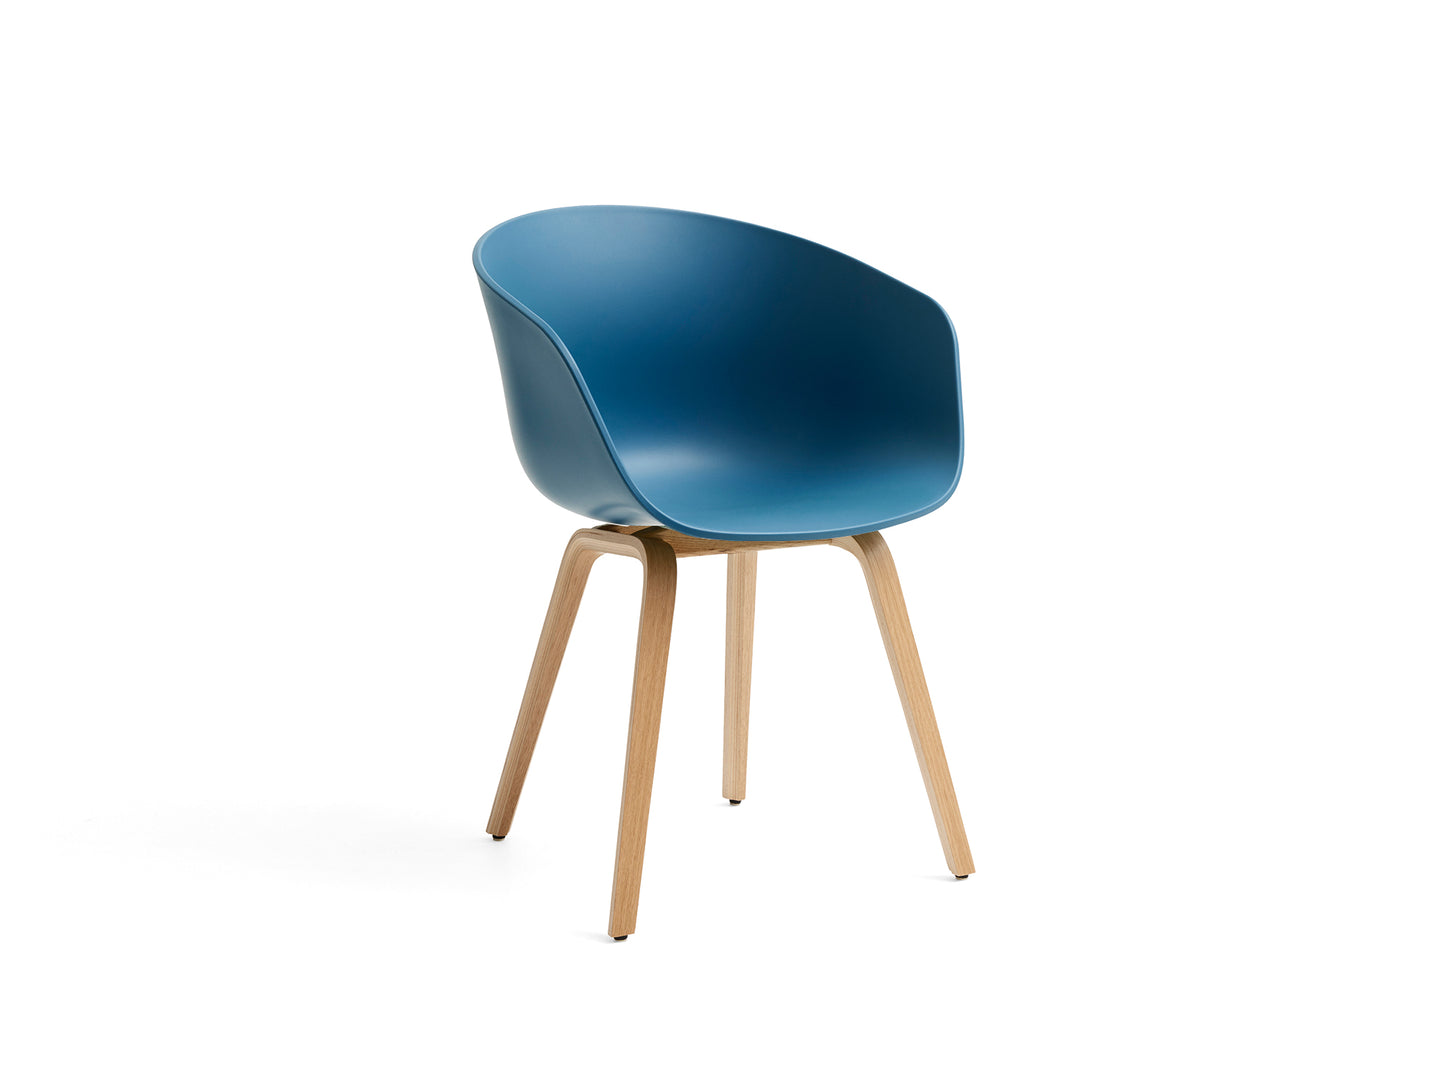 A Chair AAC 22 소개 - 새로운 색상